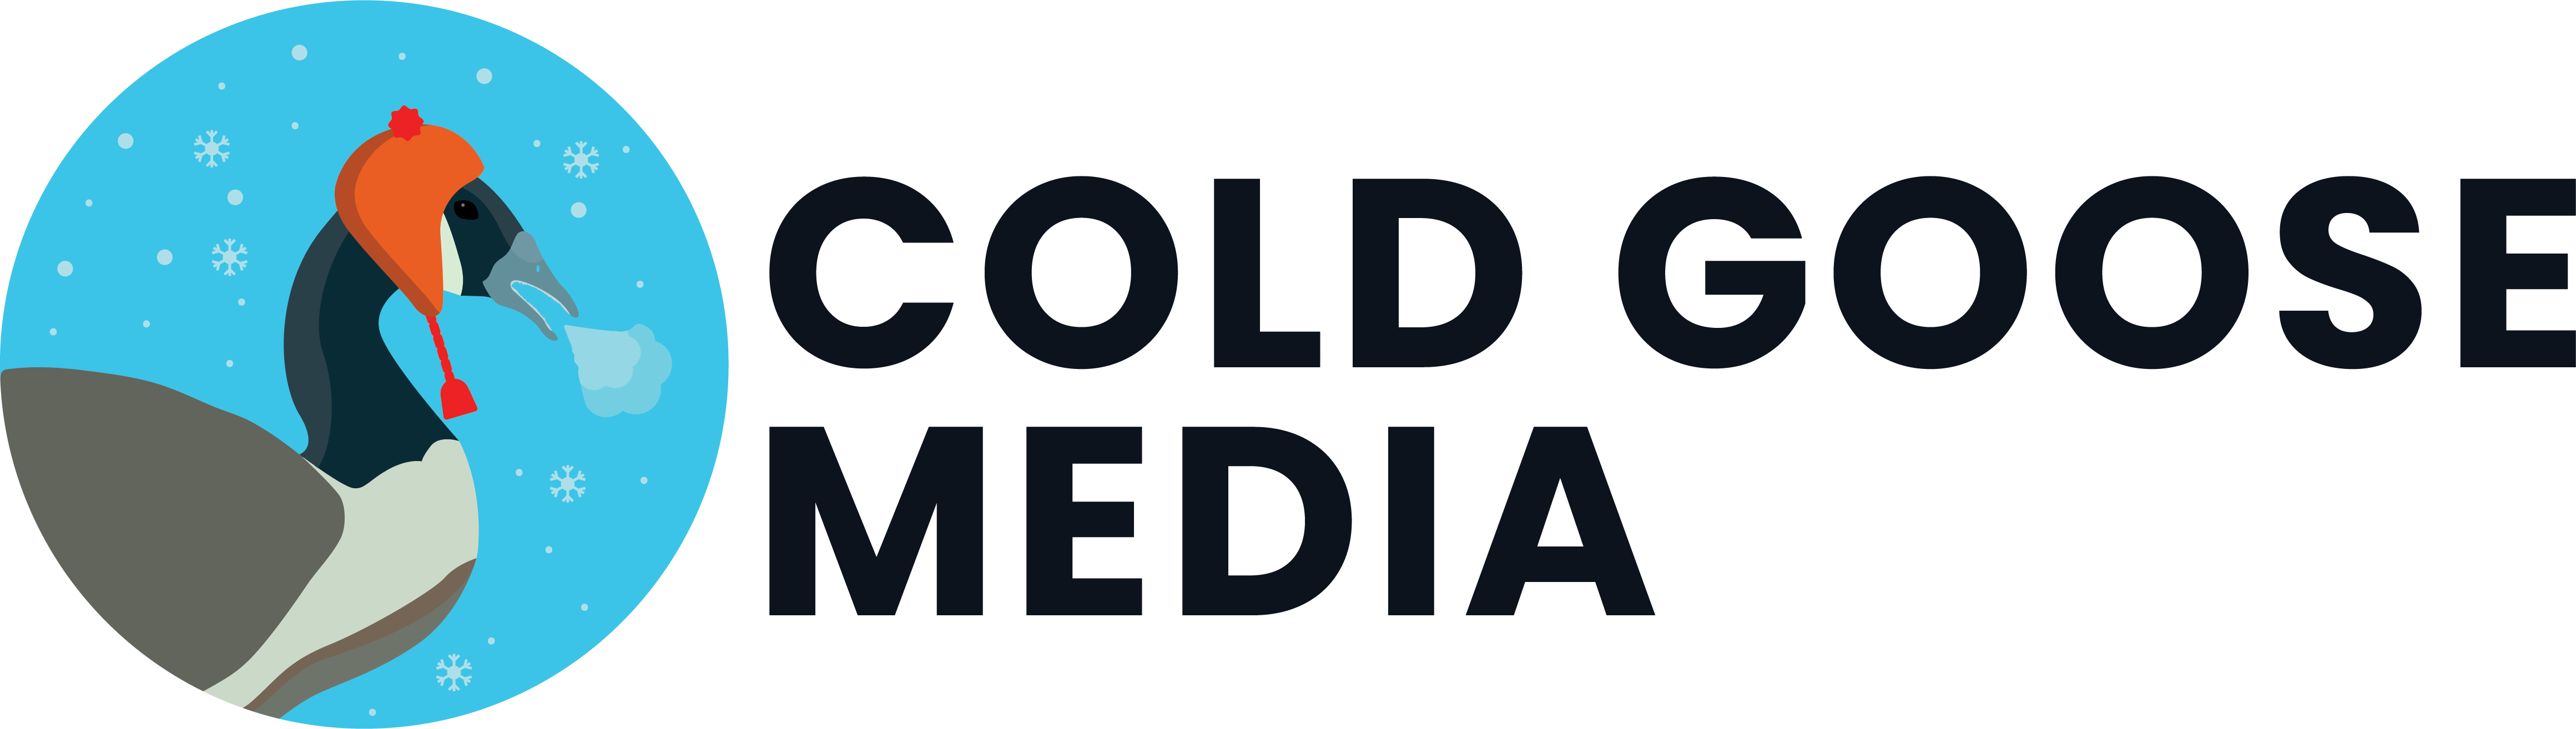 Cold Goose Media